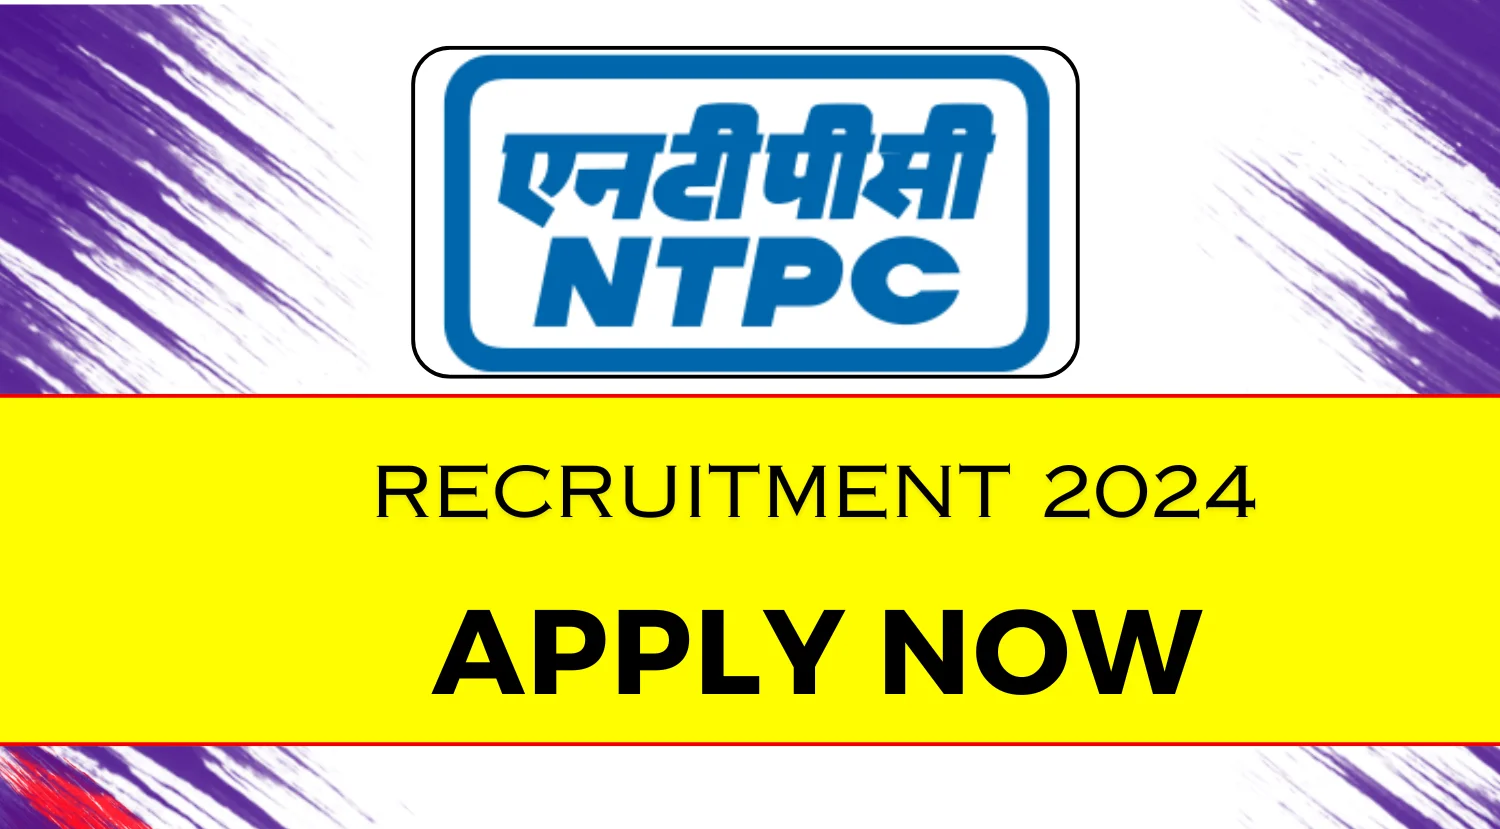 NTPC Executive Director Recruitment 2024